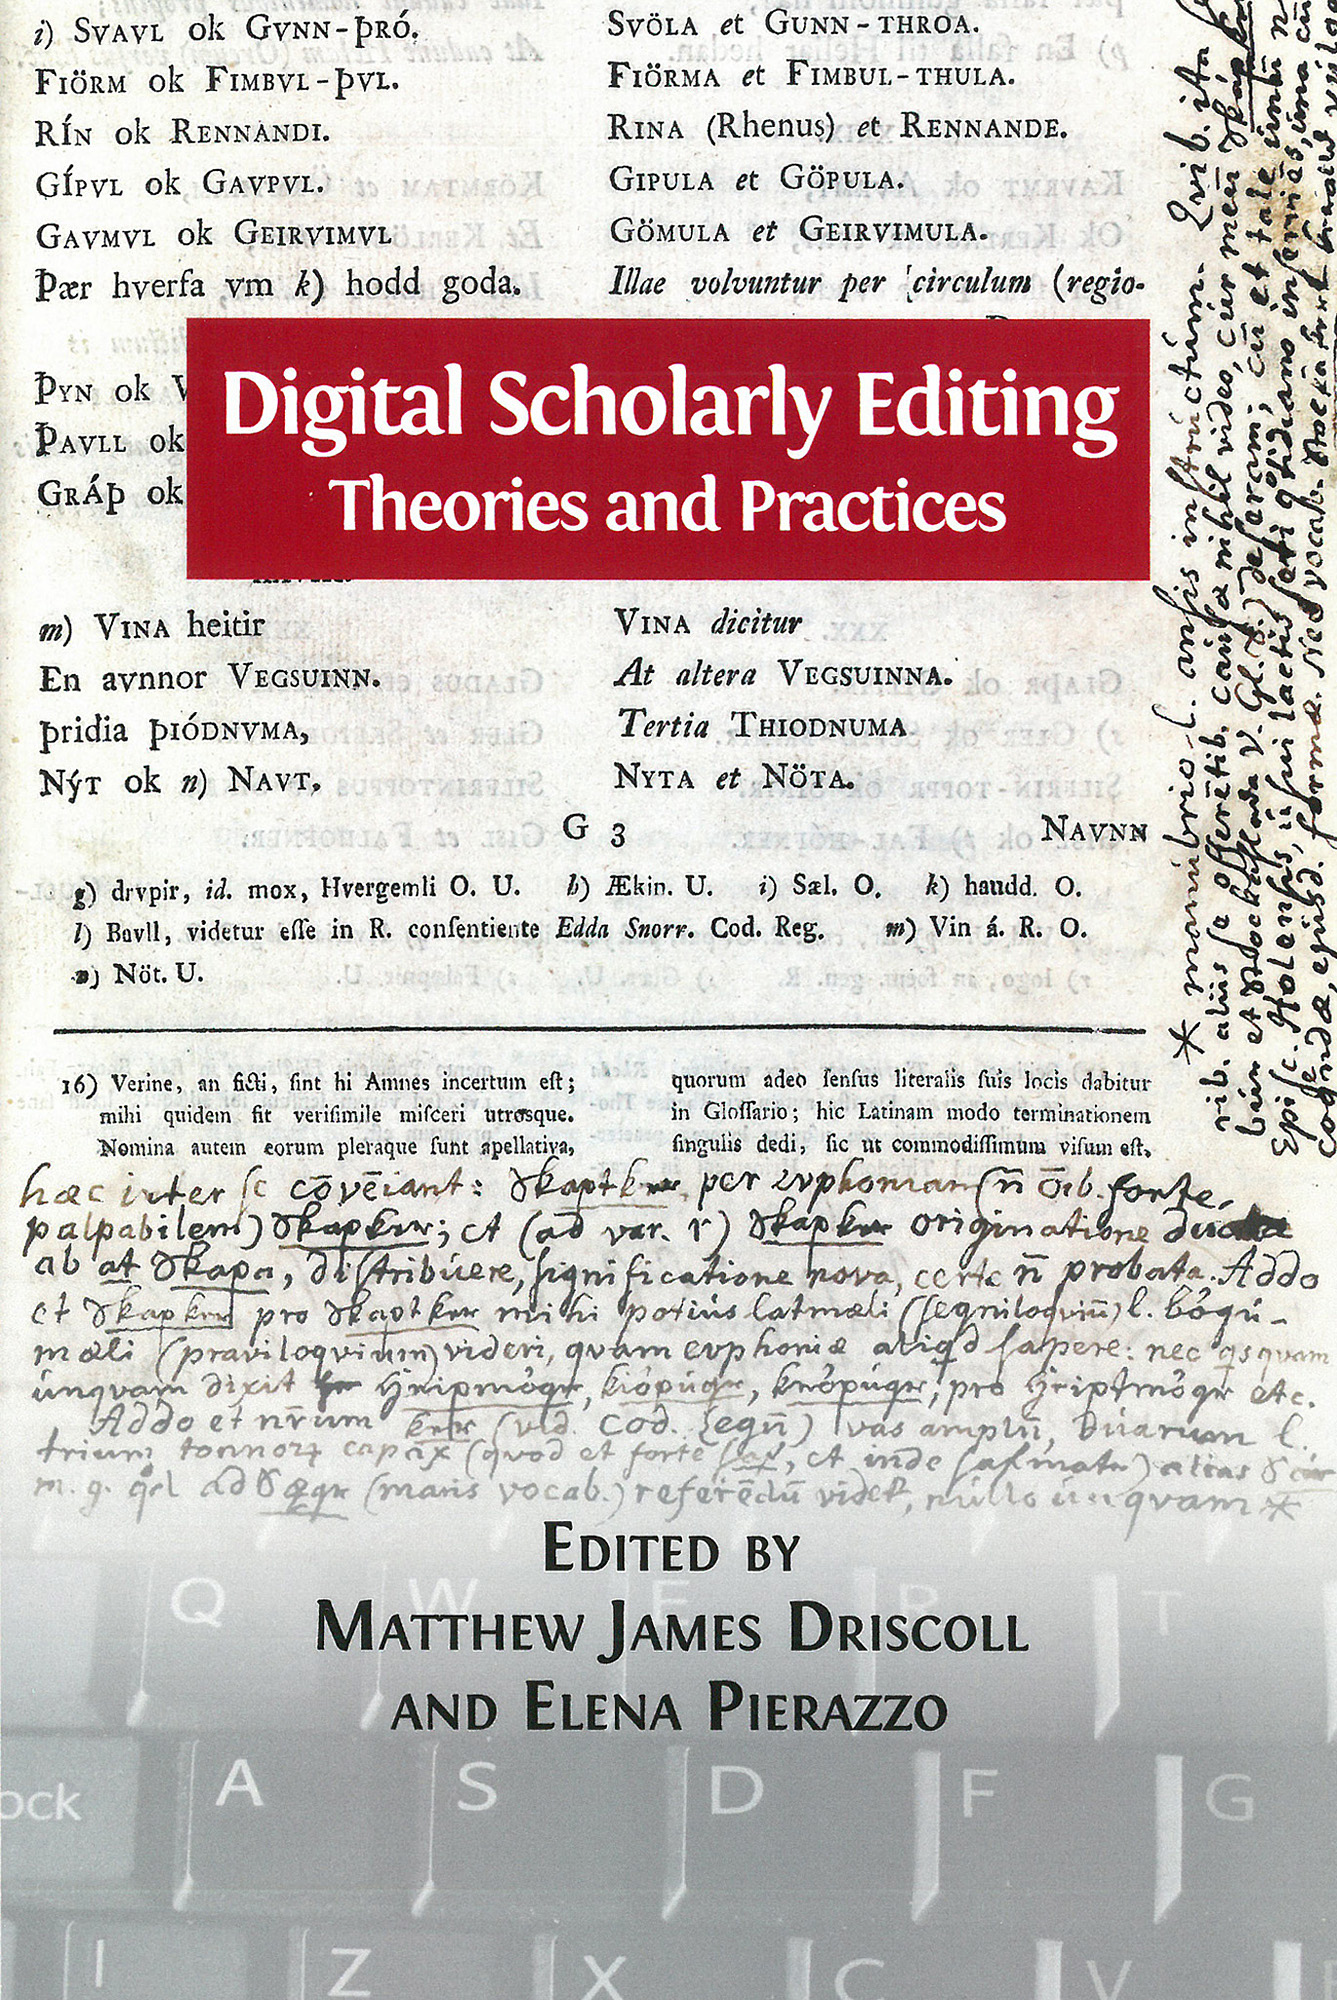 Digital scholarly editing (Cambridge: Open Book Publishers, 2016)